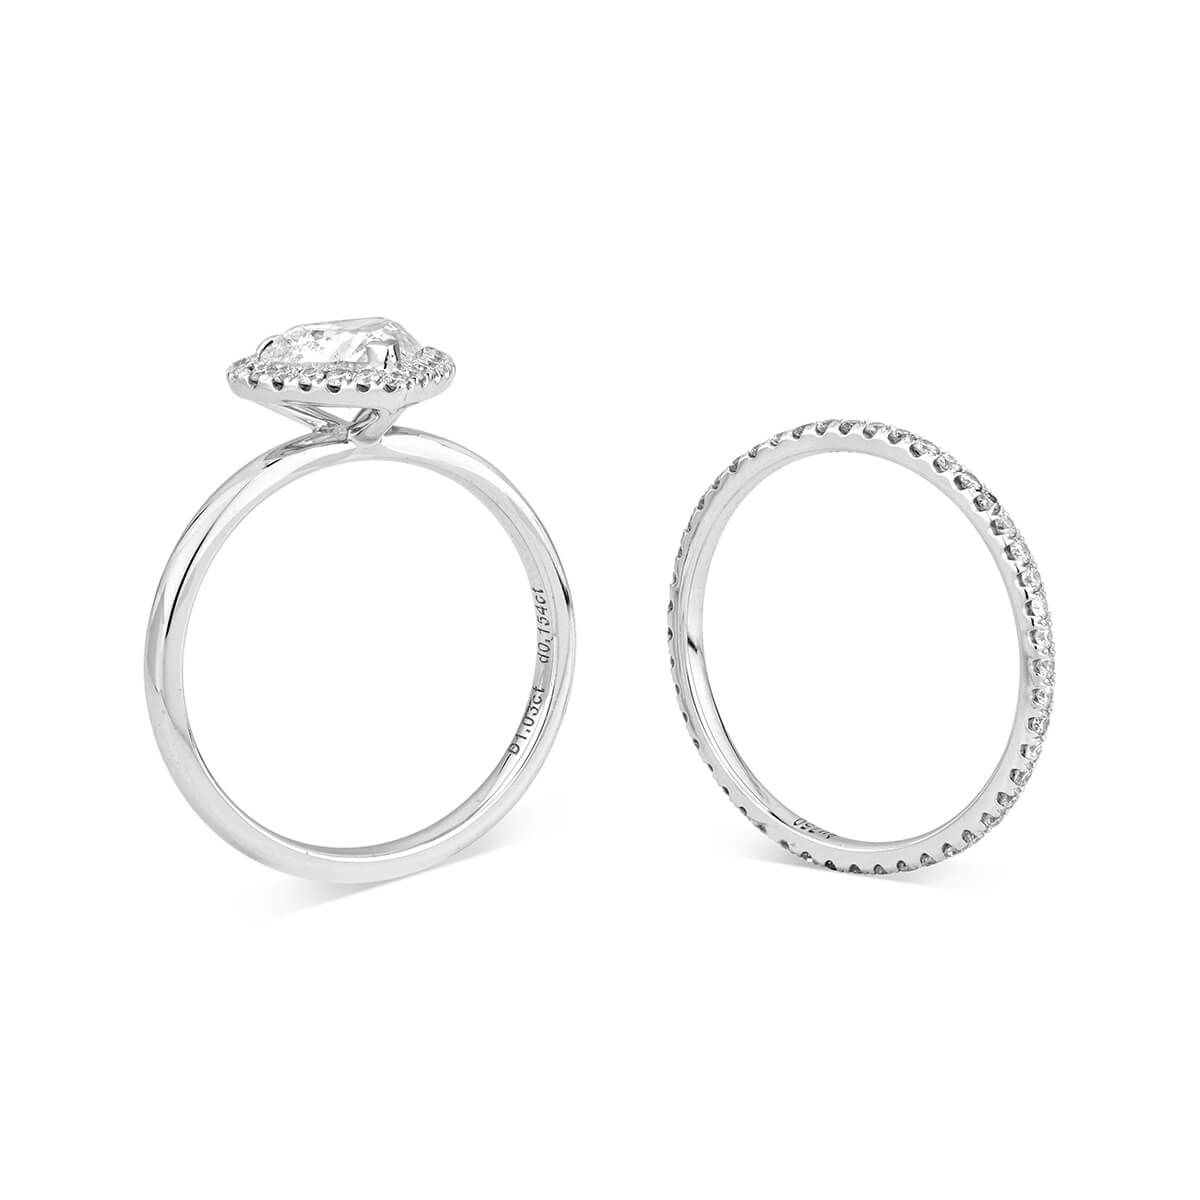  White Diamond Ring, 1.48 Ct. TW, Heart shape, GIA Certified, 3285904764